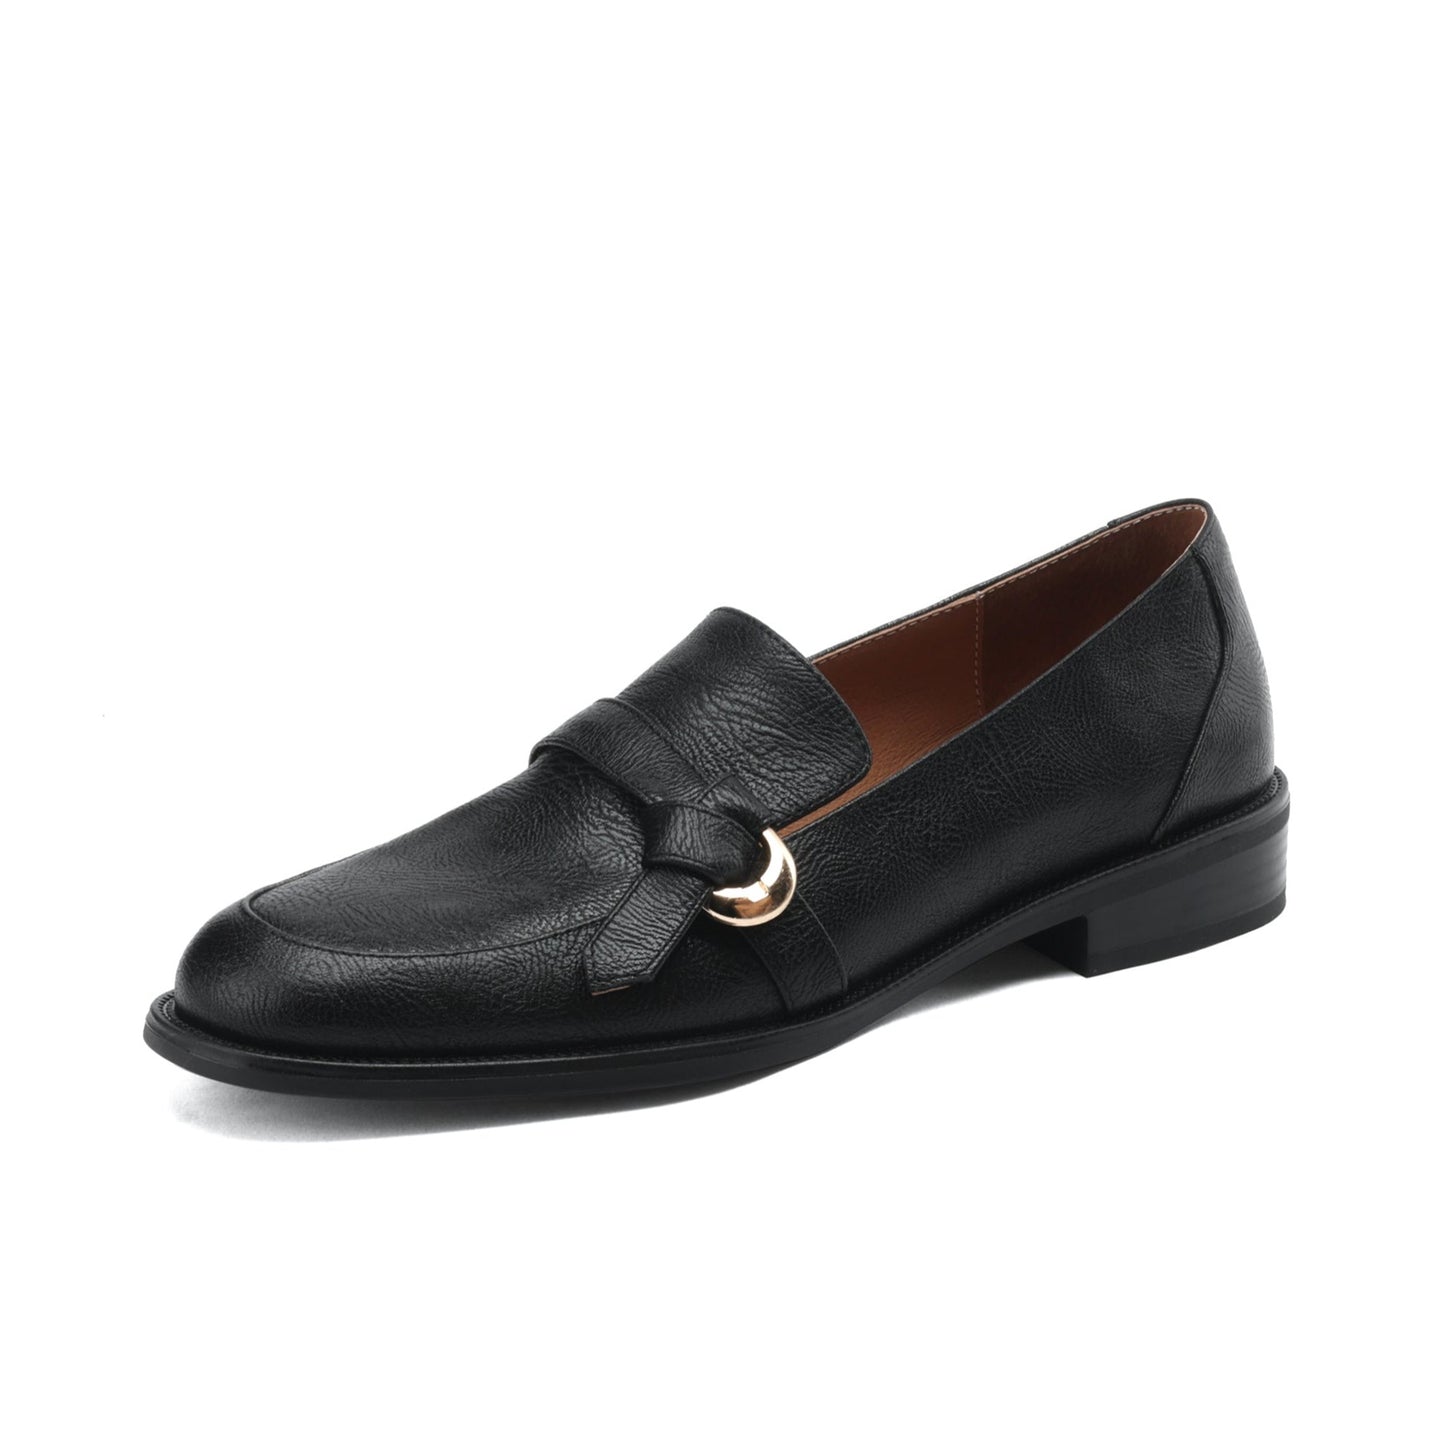 TinaCus Handmade Women's Genuine Leather Round Toe Slip On Flat Shoes